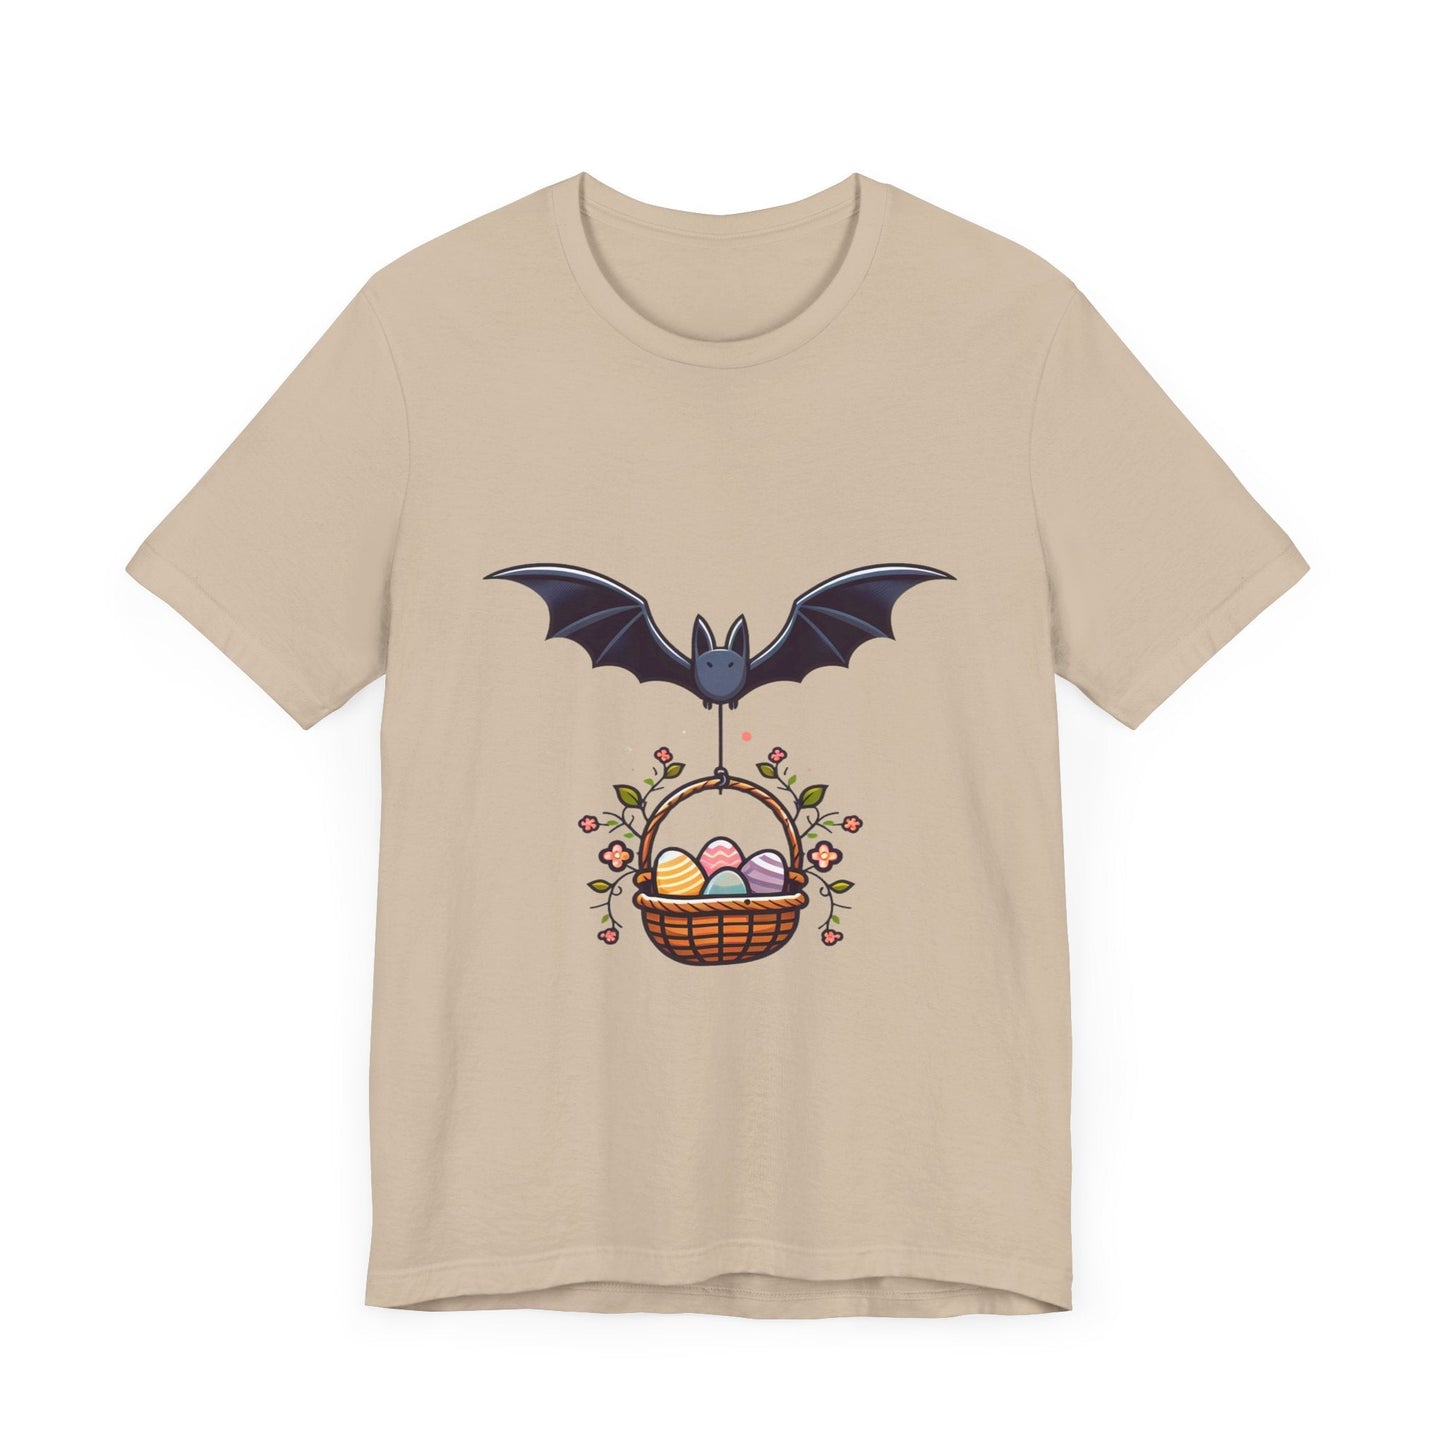 Bat With Easter Basket Short Sleeve Tee ShirtT - ShirtVTZdesignsTanXSbatsCottonCrew neck